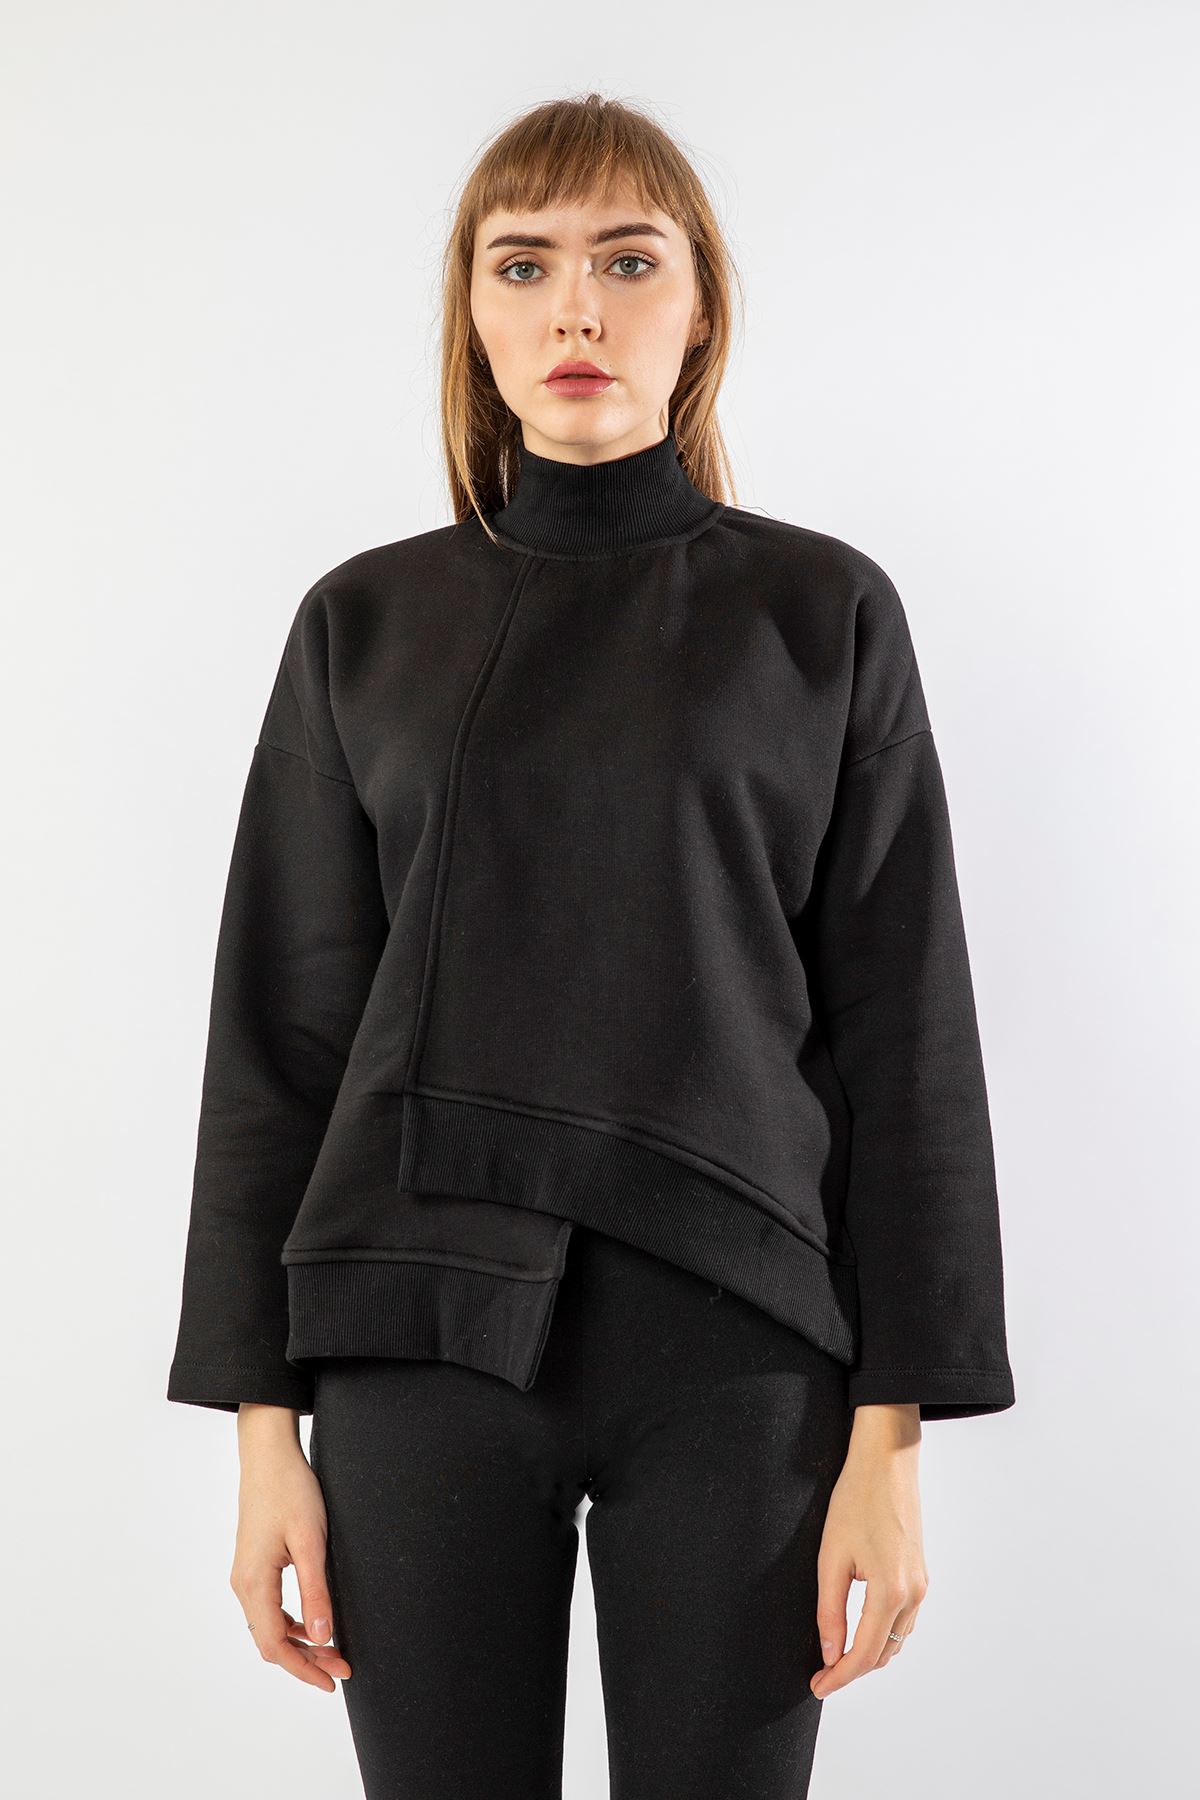 Thread Knit FabricLong Sleeve Hip Height Asymmetric Women Sweatshirt - Black